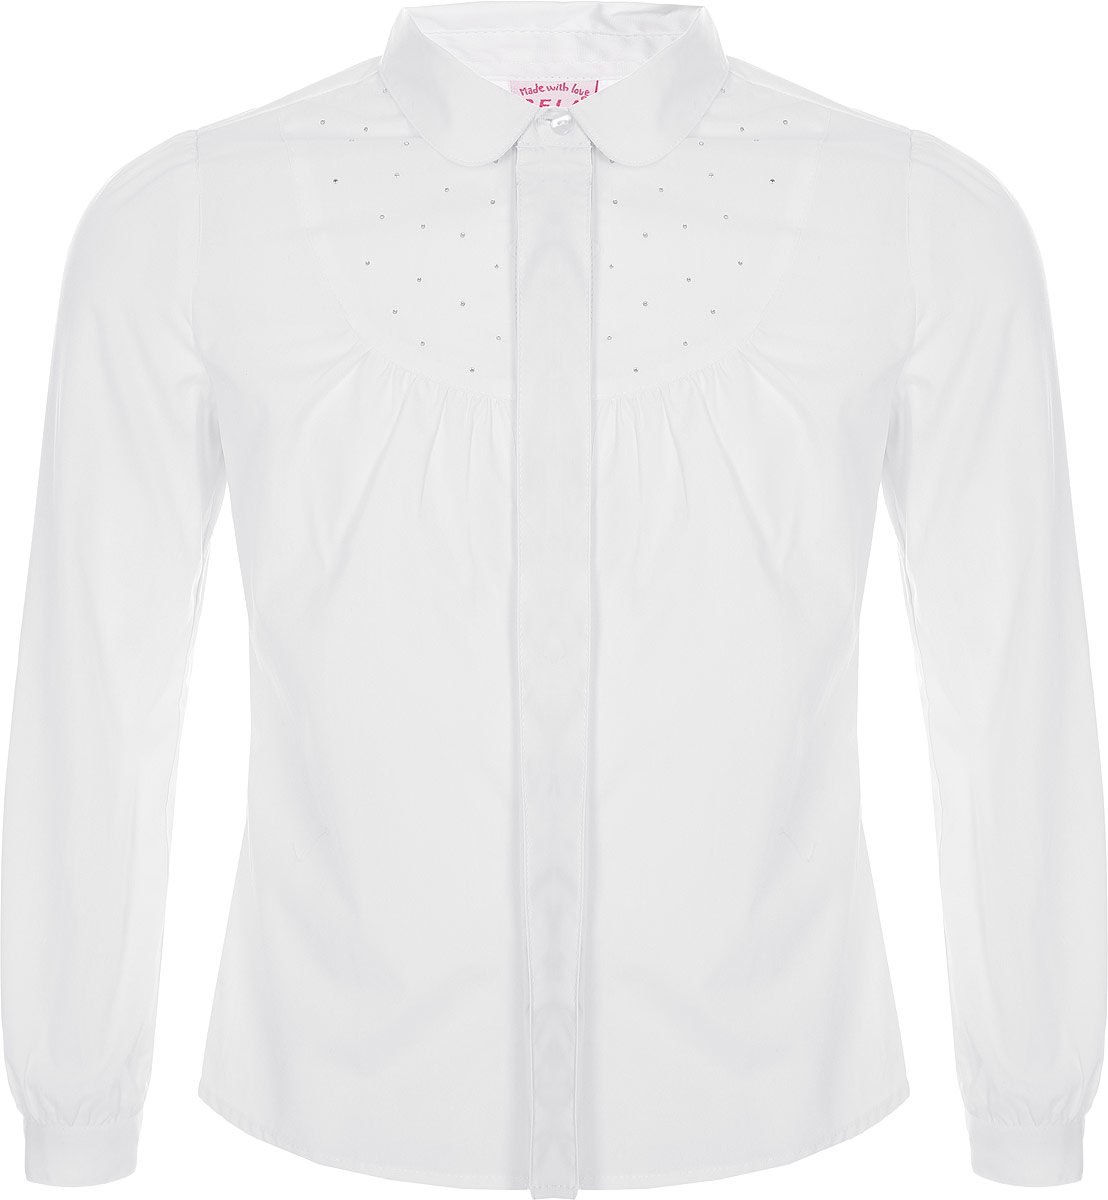 Блузка для девочки Sela, цвет: белый. B-612/1008-8310. Размер 146